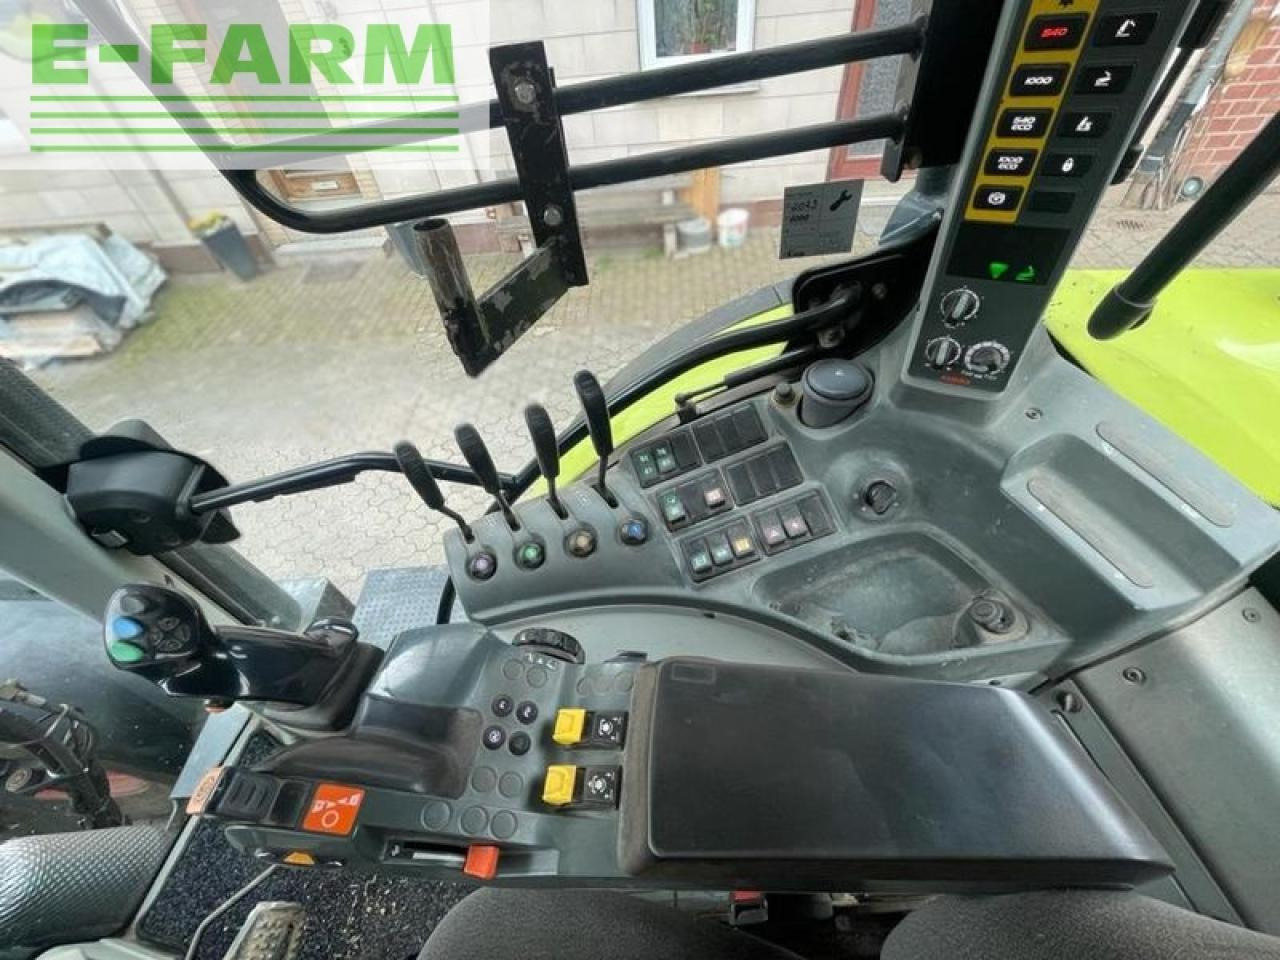 Farm tractor CLAAS arion 620 t3b